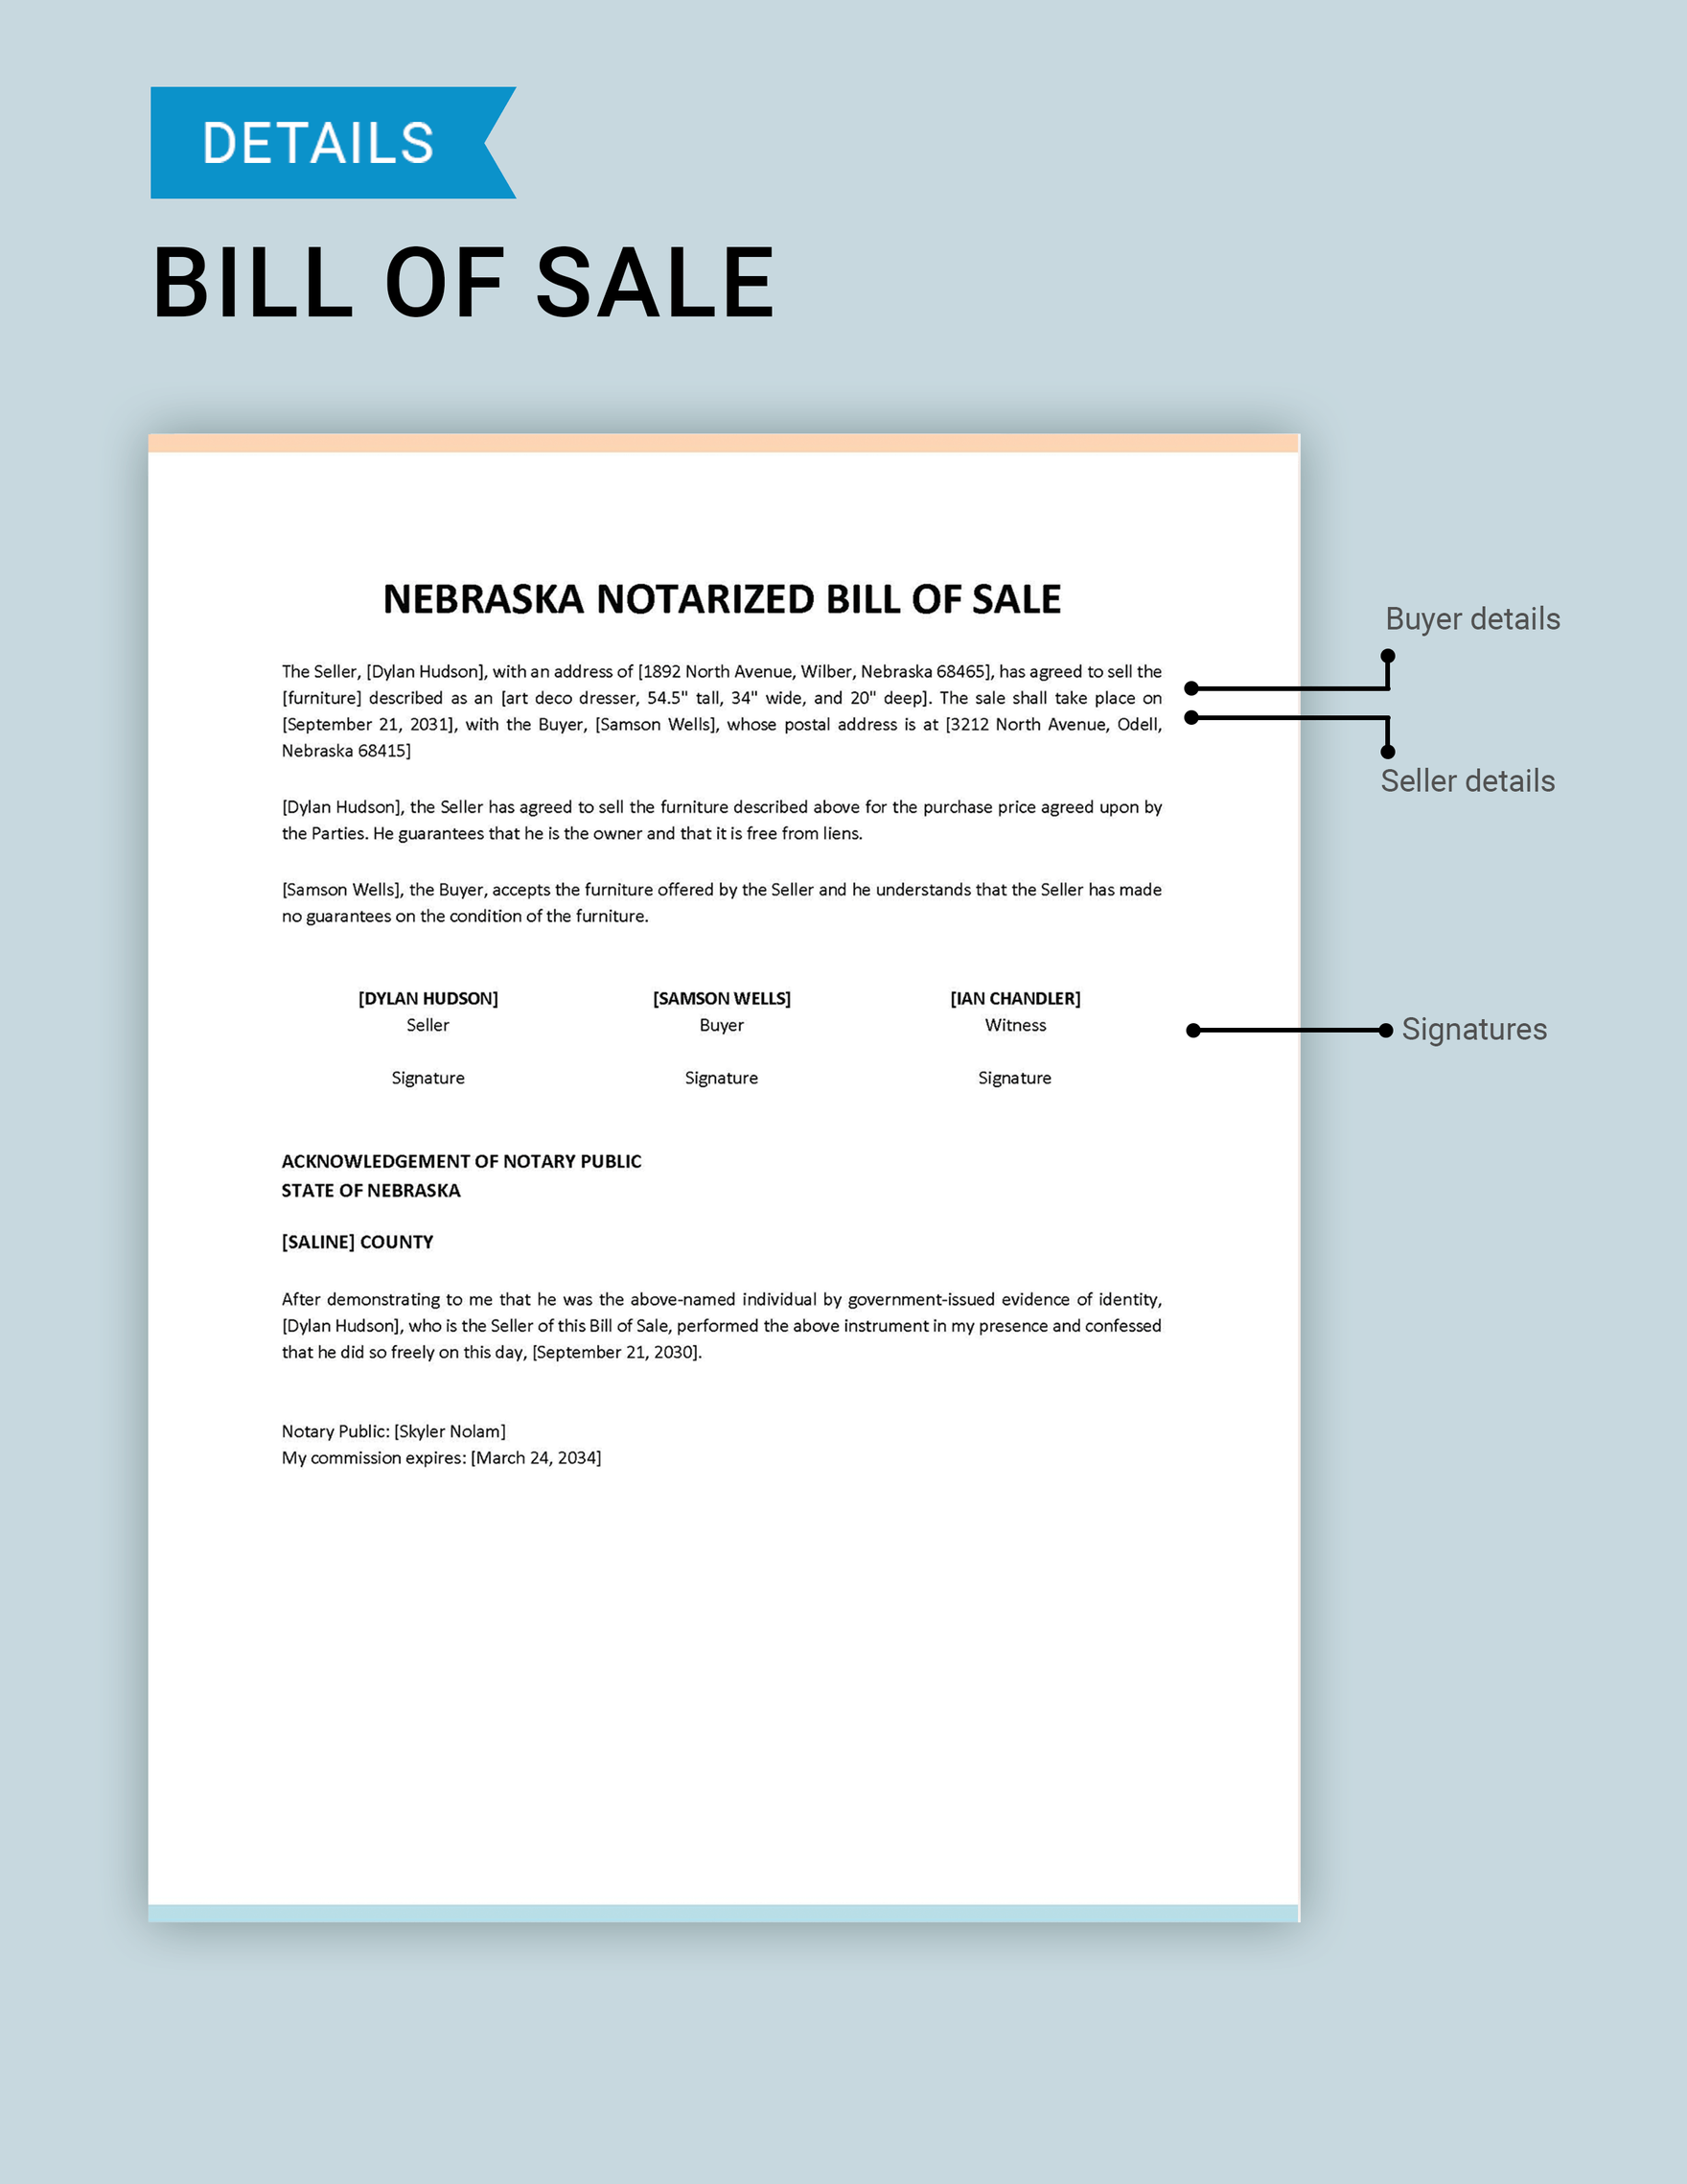 Nebraska Notarized Bill of Sale Template